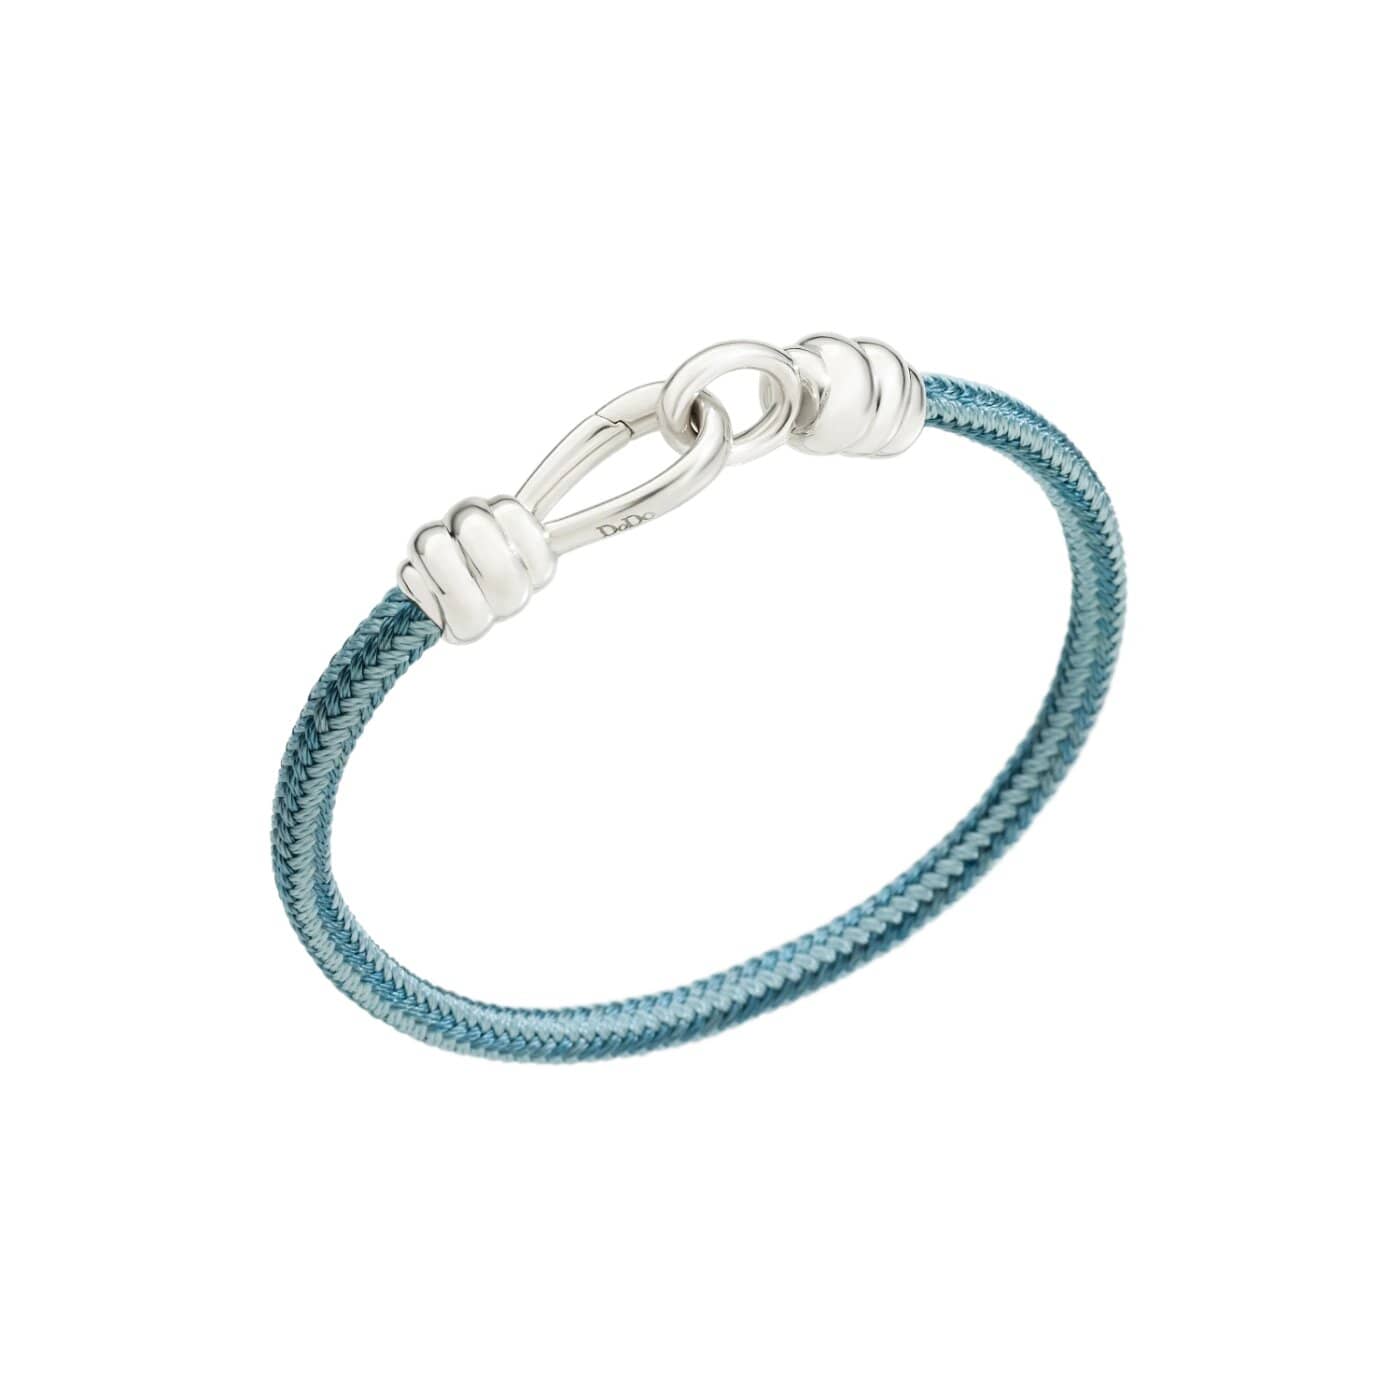 Bracelet Nodo argent 925 de Dodo avec bracelet bleu clair